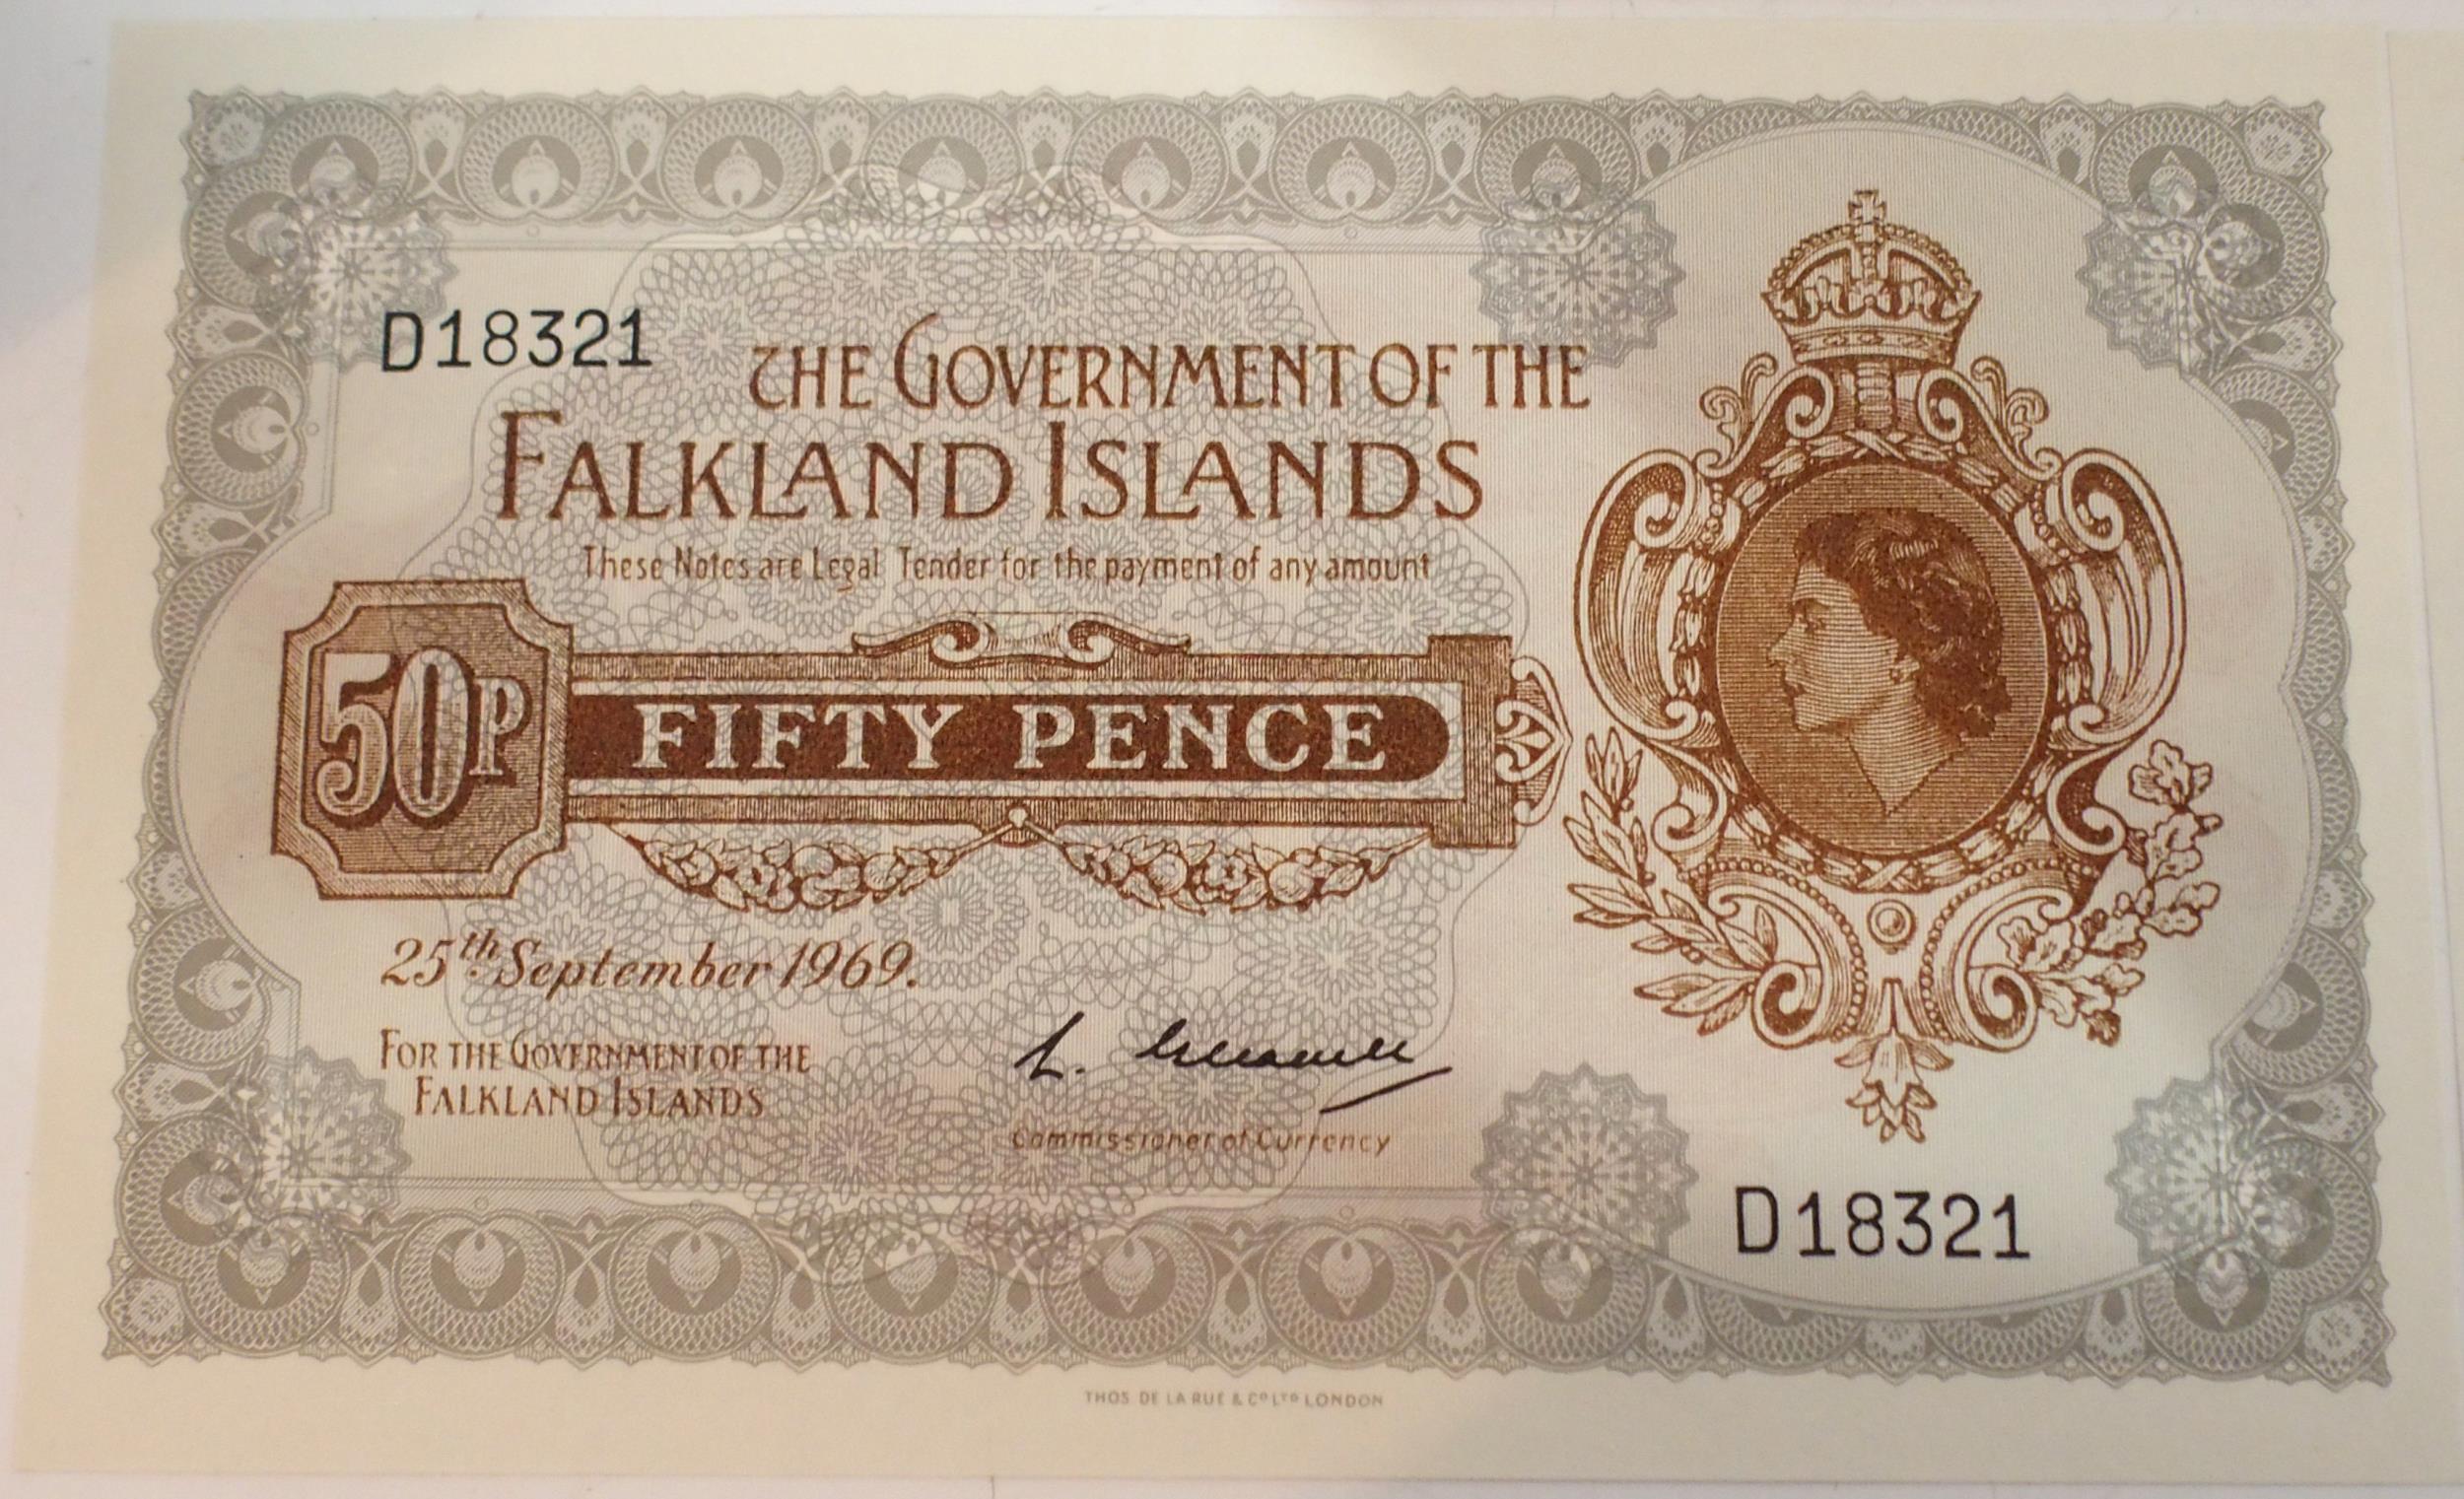 Falkland Islands (British Overseas Territories) 50p Bank Notes D18321 25th September 1969, D28583 - Image 5 of 6